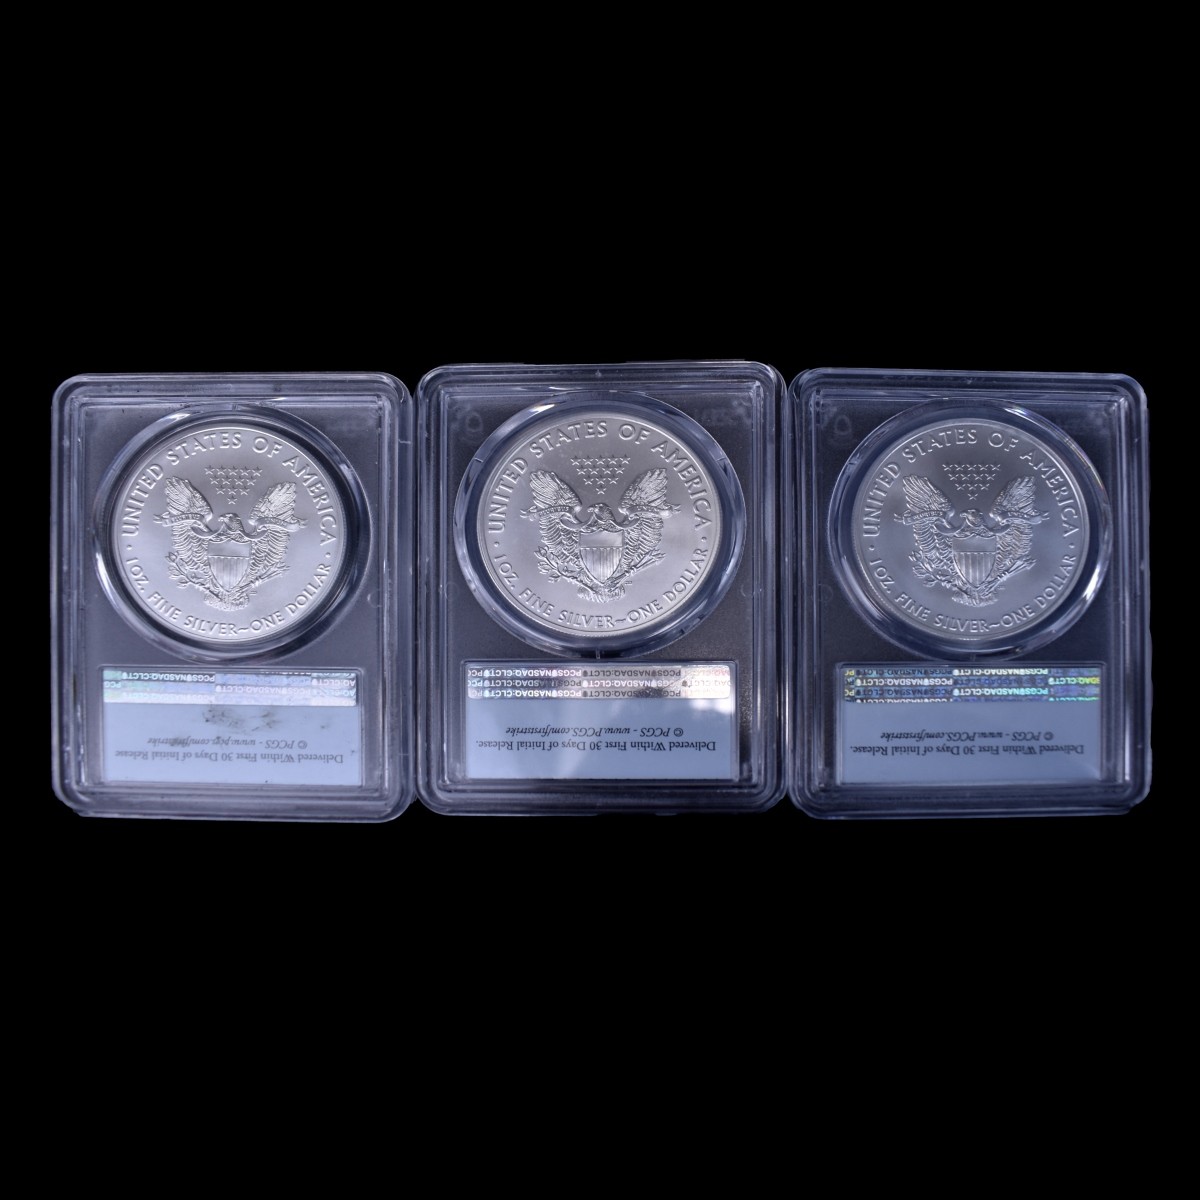 Three $1 Silver Eagle Slabbed 1 Oz. Coins